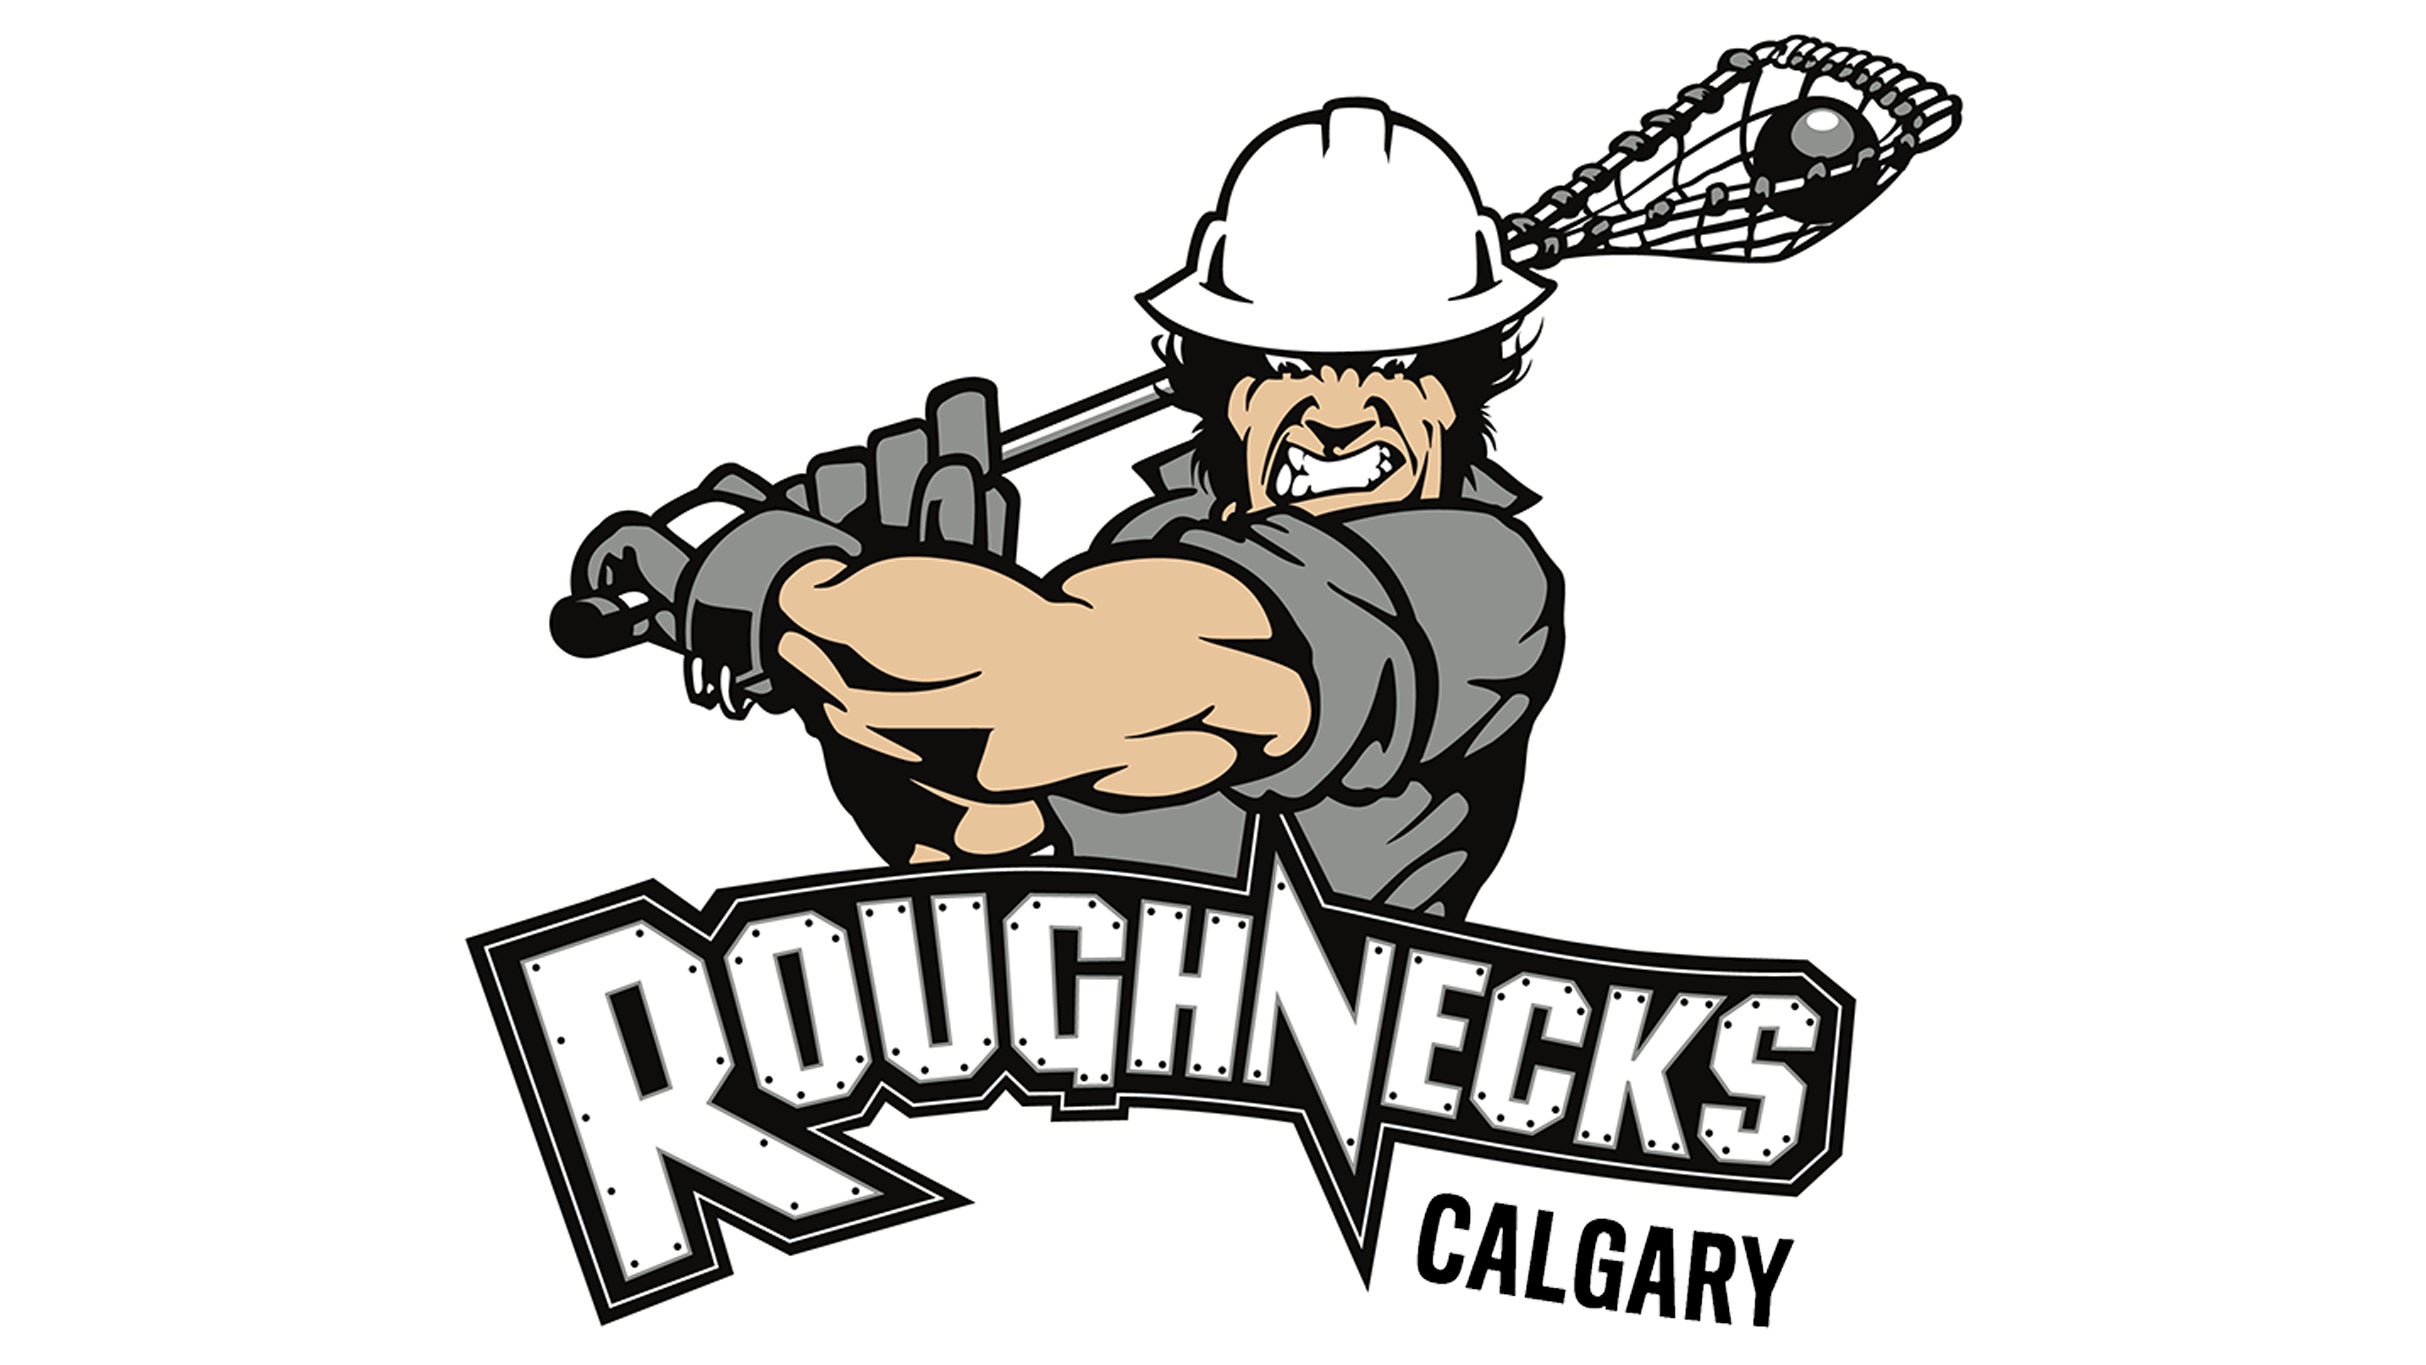 Calgary Roughnecks vs. Albany FireWolves in Calgary promo photo for Black Friday  presale offer code